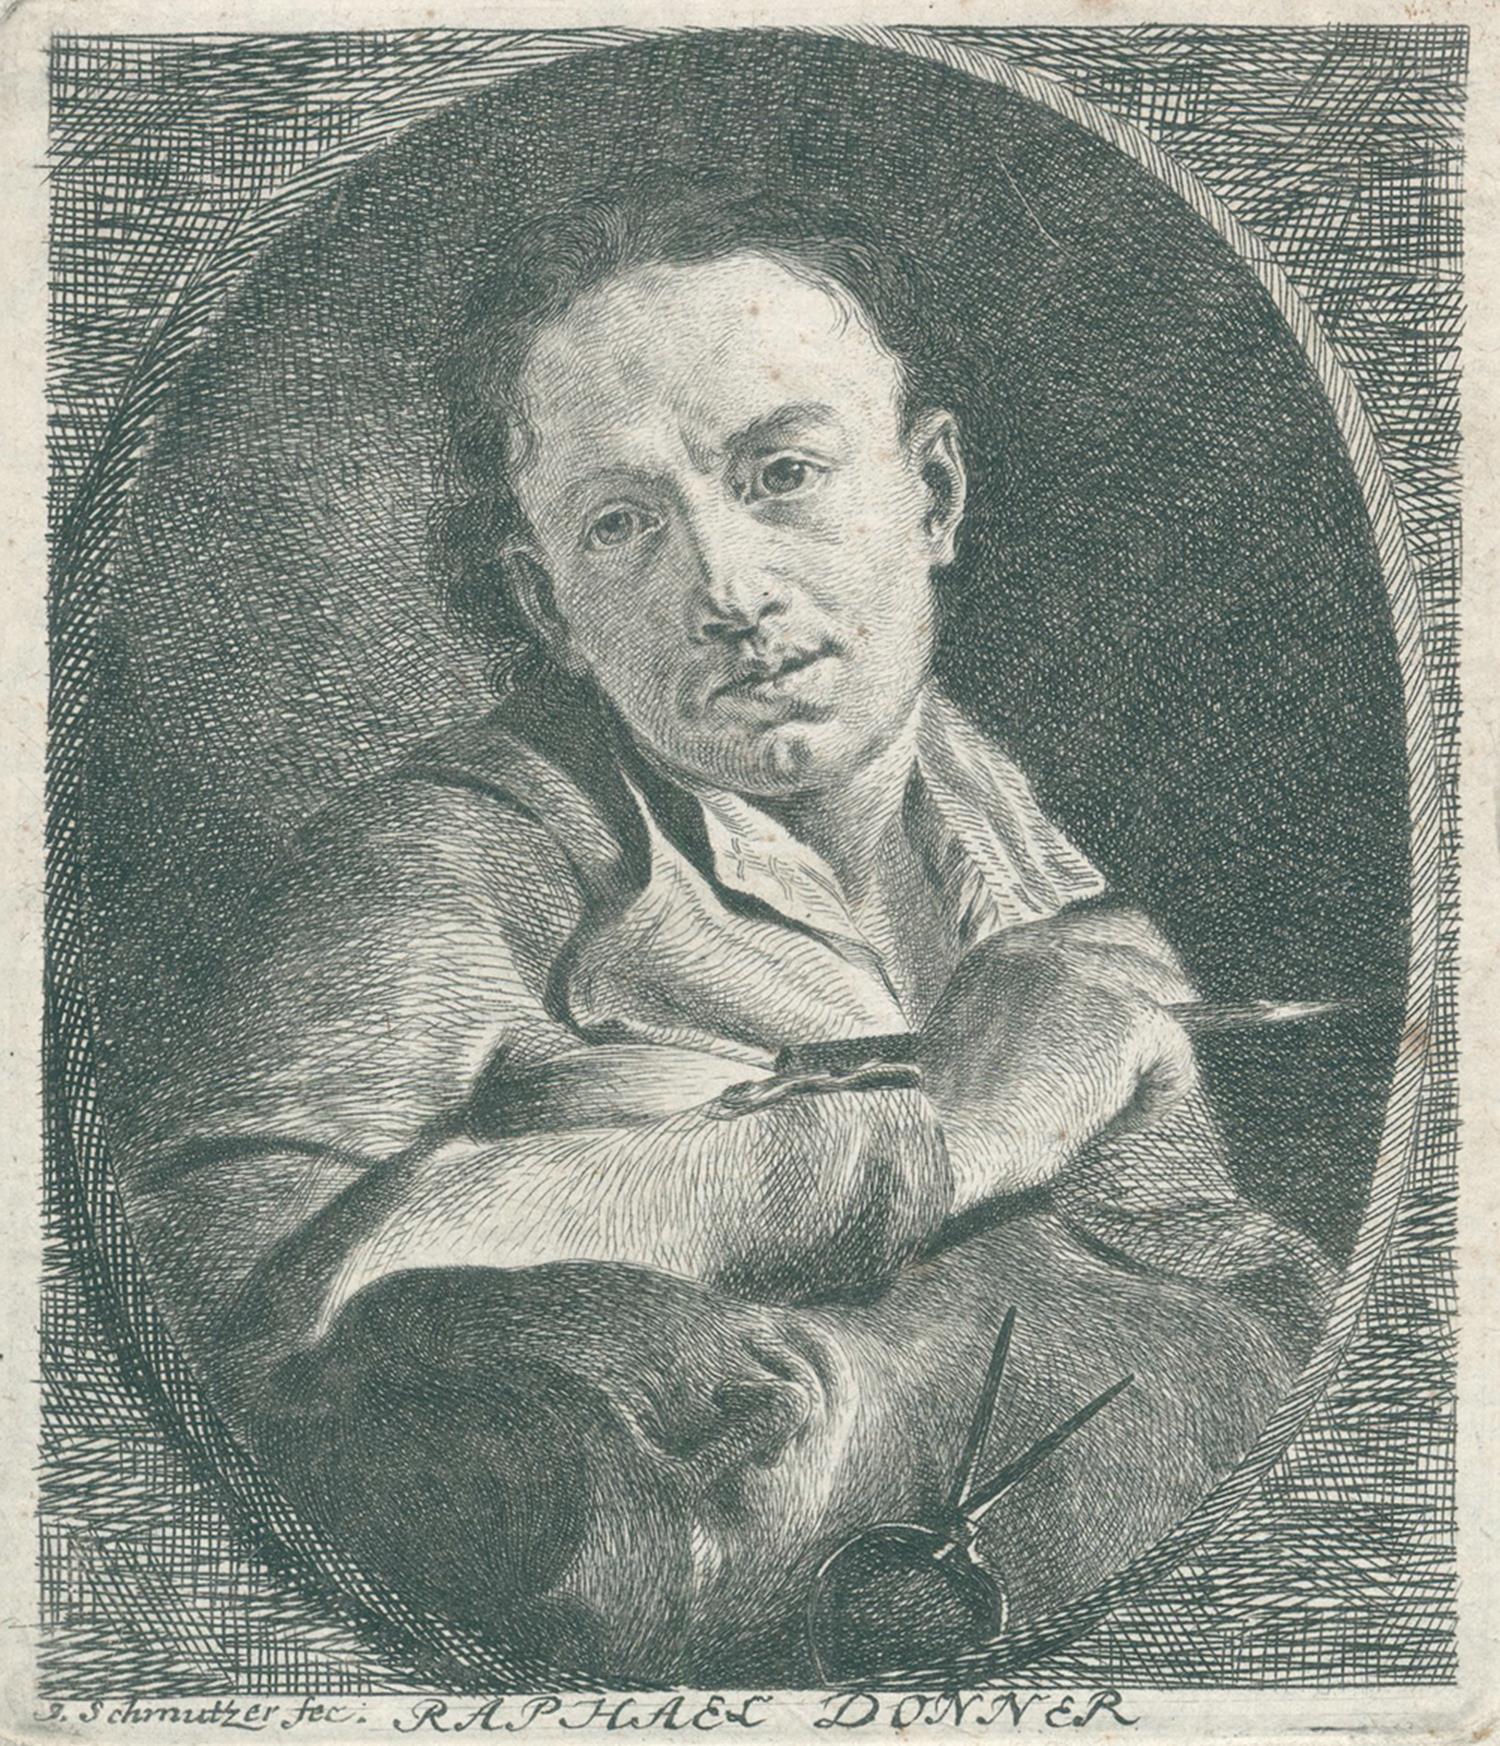 Schmutzer, Jacob Matthias II | Bild Nr.1